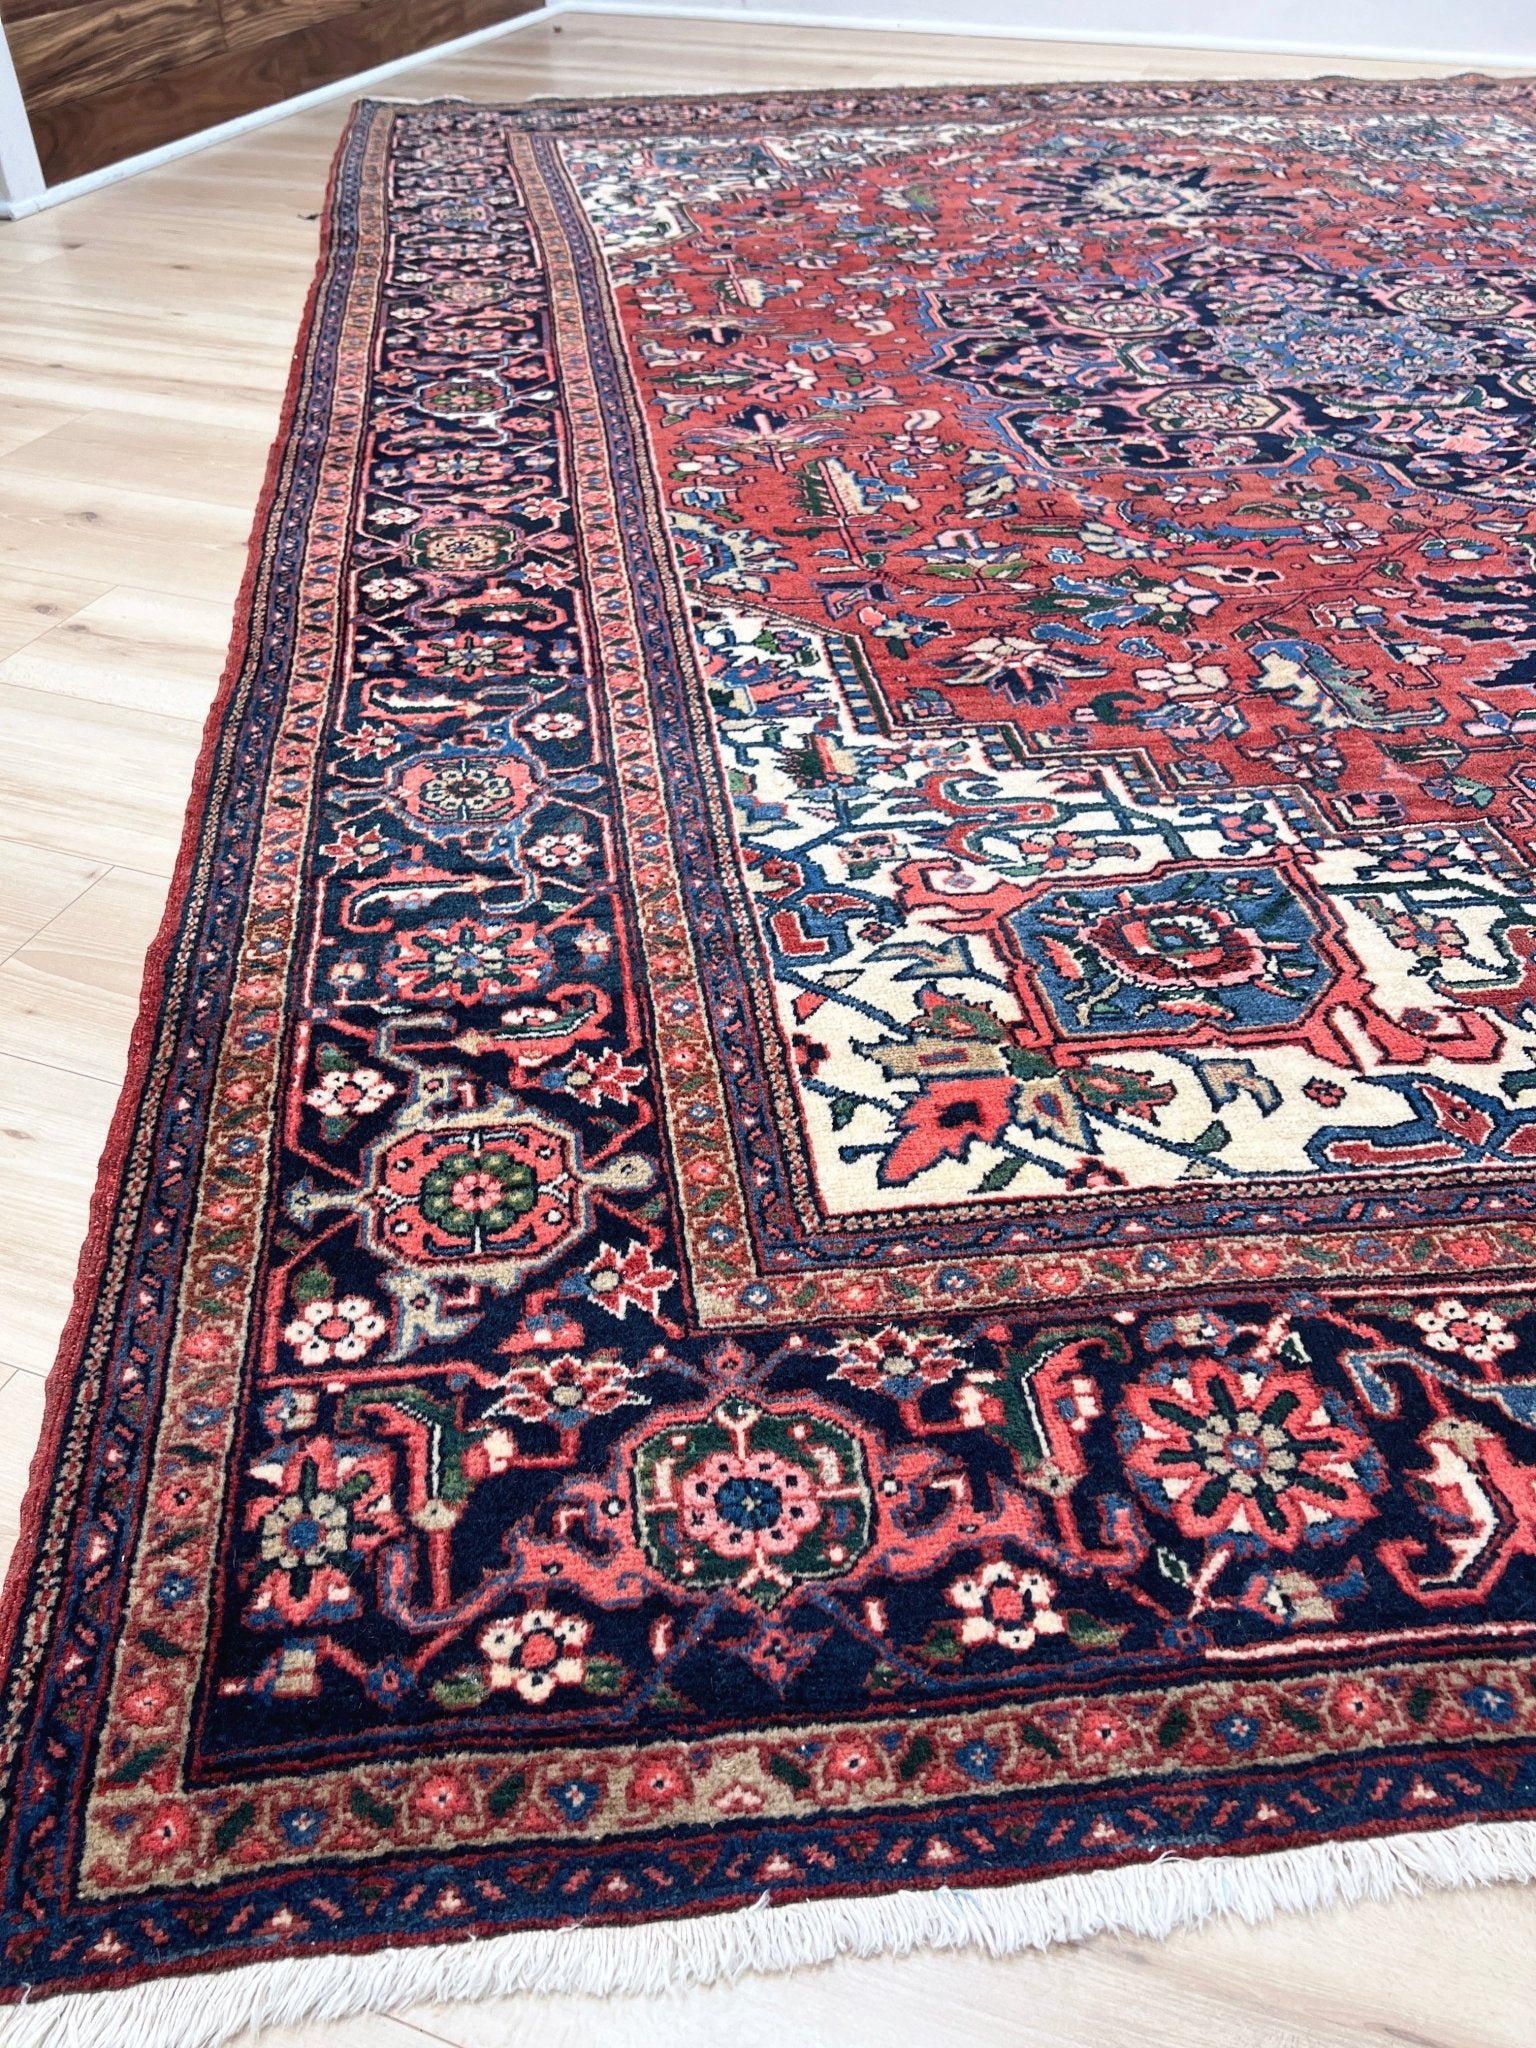 Large heriz vintage persian area rug Oriental rug shop San francisco bay area. Buy rug shop online free shipping